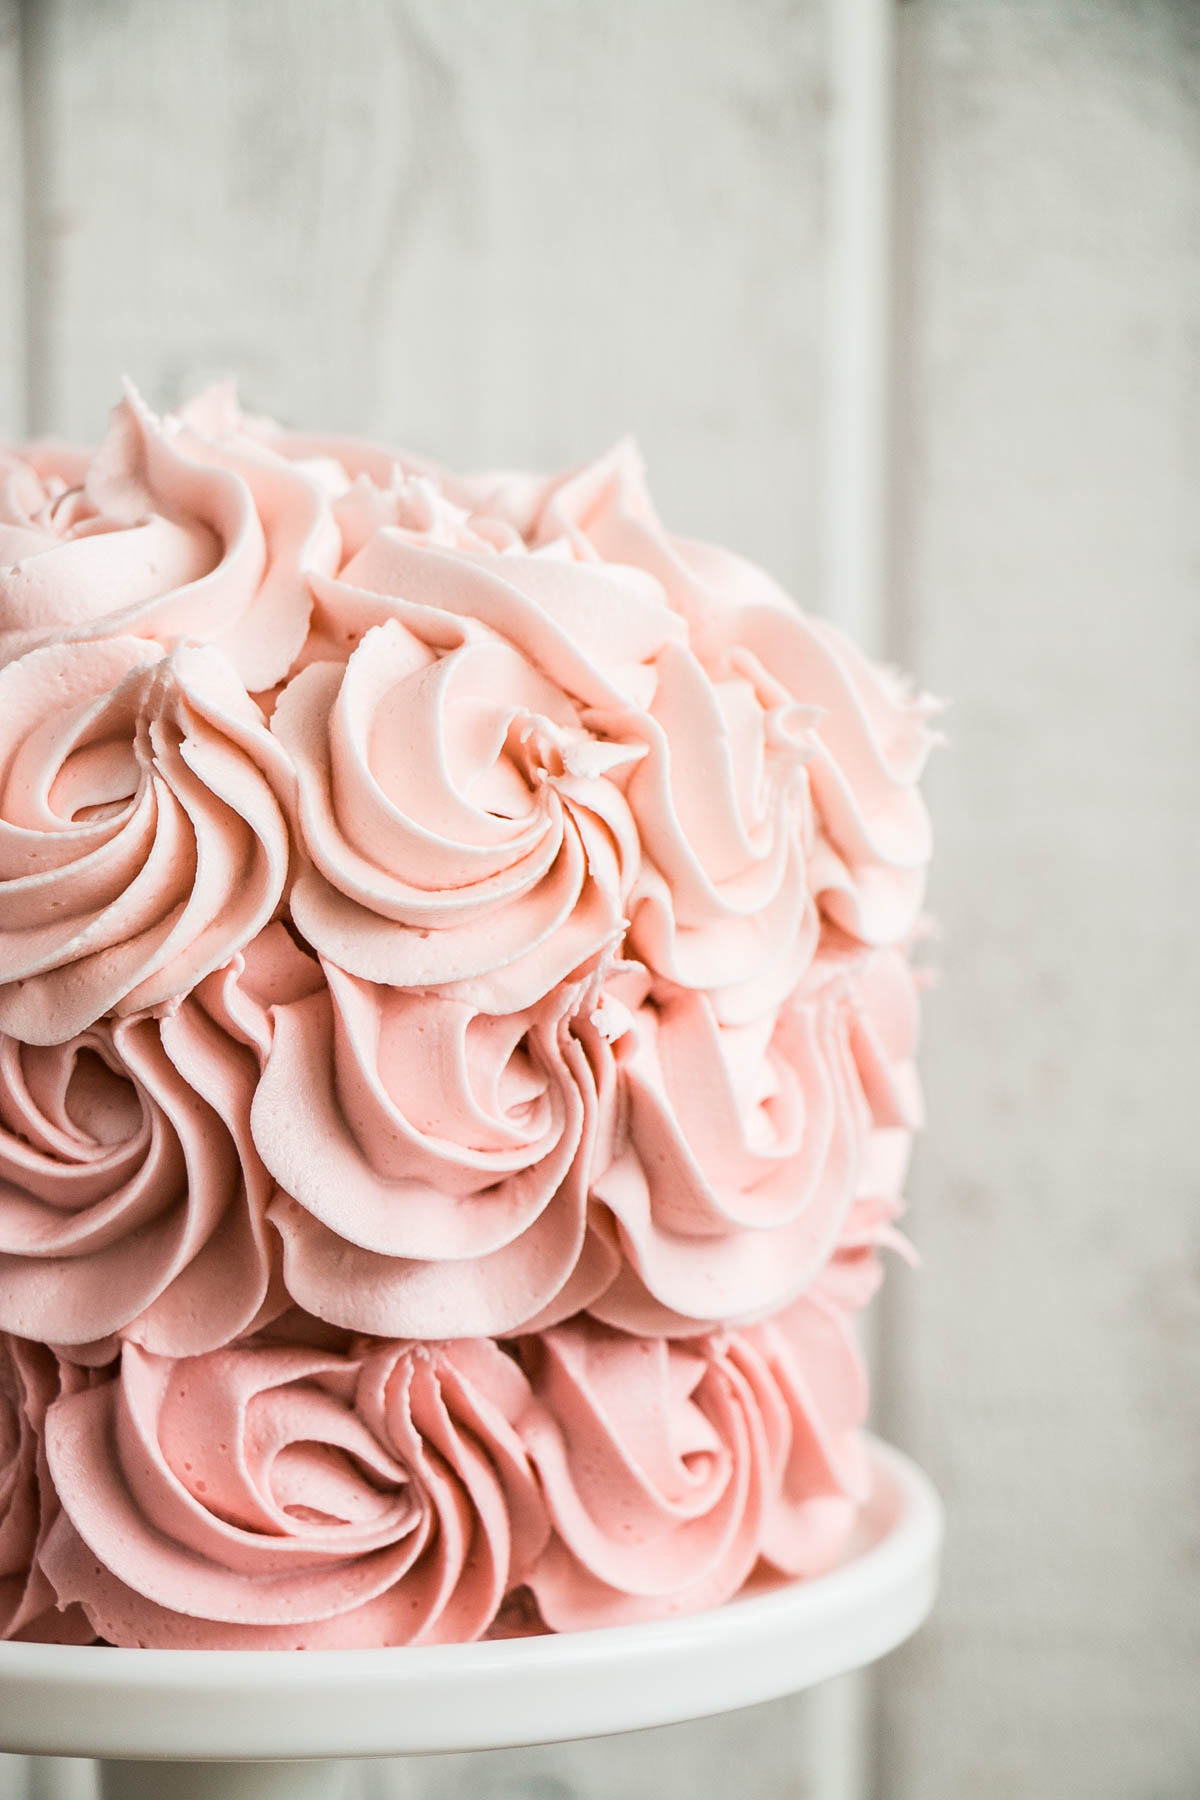 Tips on how to make an Ombré Rosette Cake (easily!). #cake #cakedecorating 